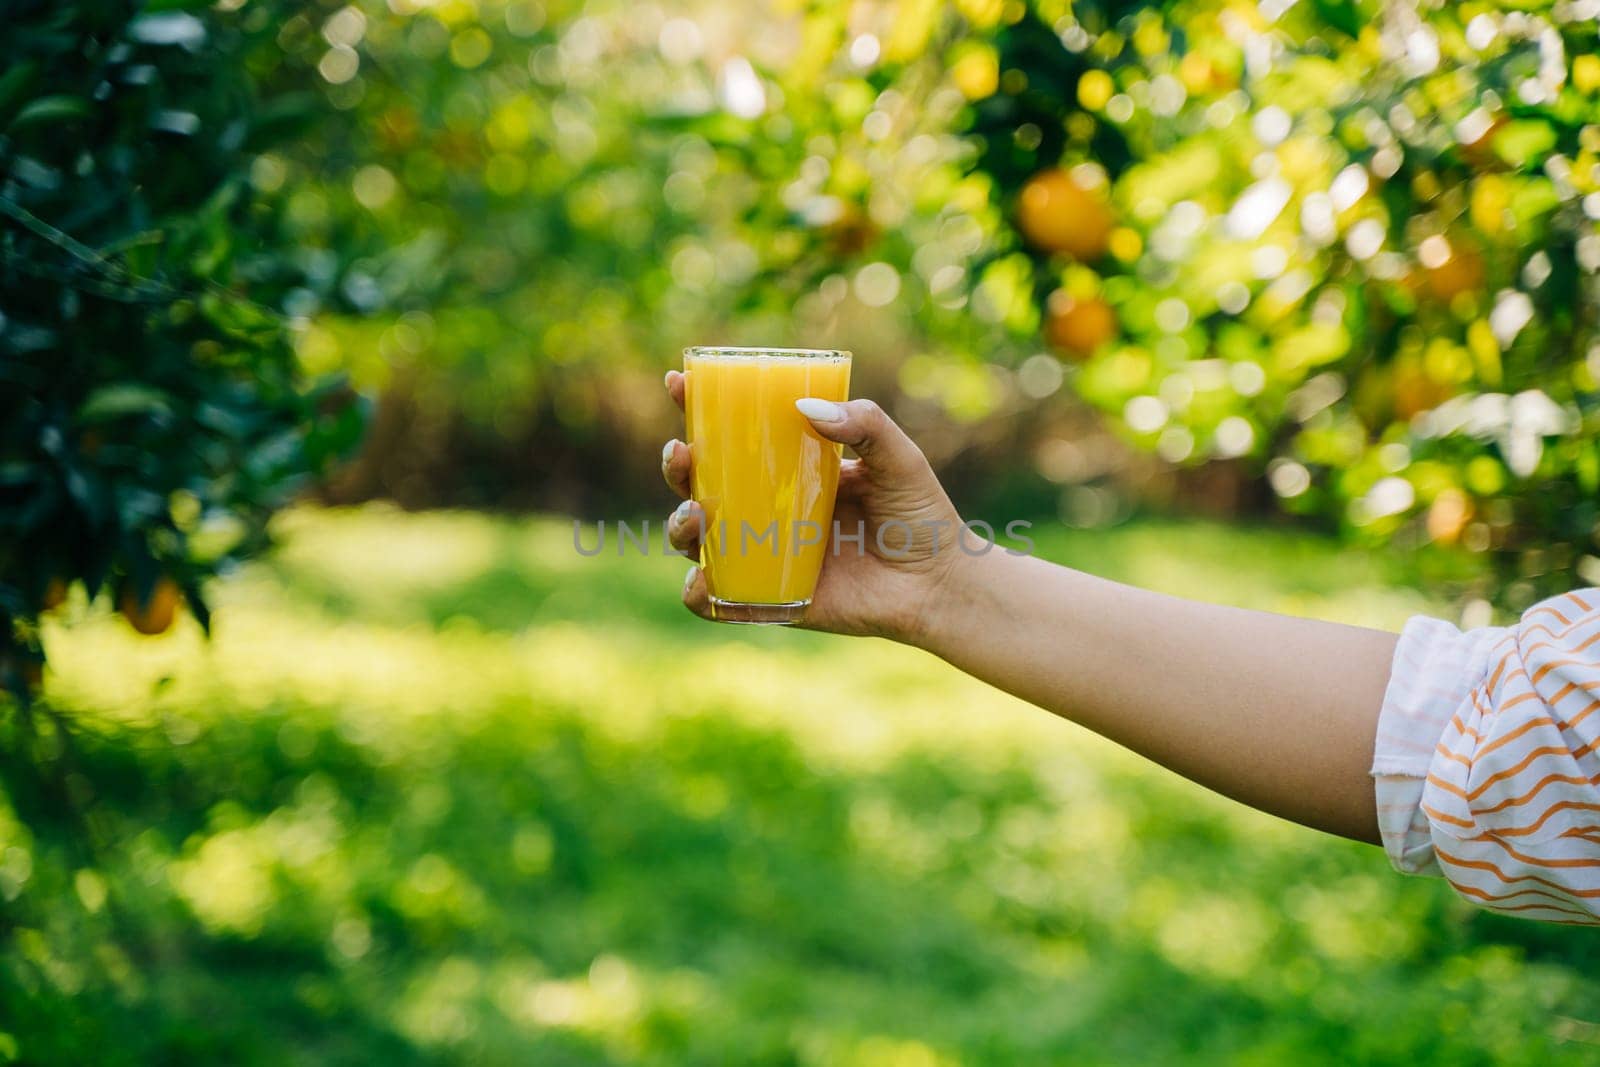 Closeup hand holding a glass of fresh organic citrus juice beverage lemonade, under the ripe orange tree branch in the orangery orchard garden farm on background.